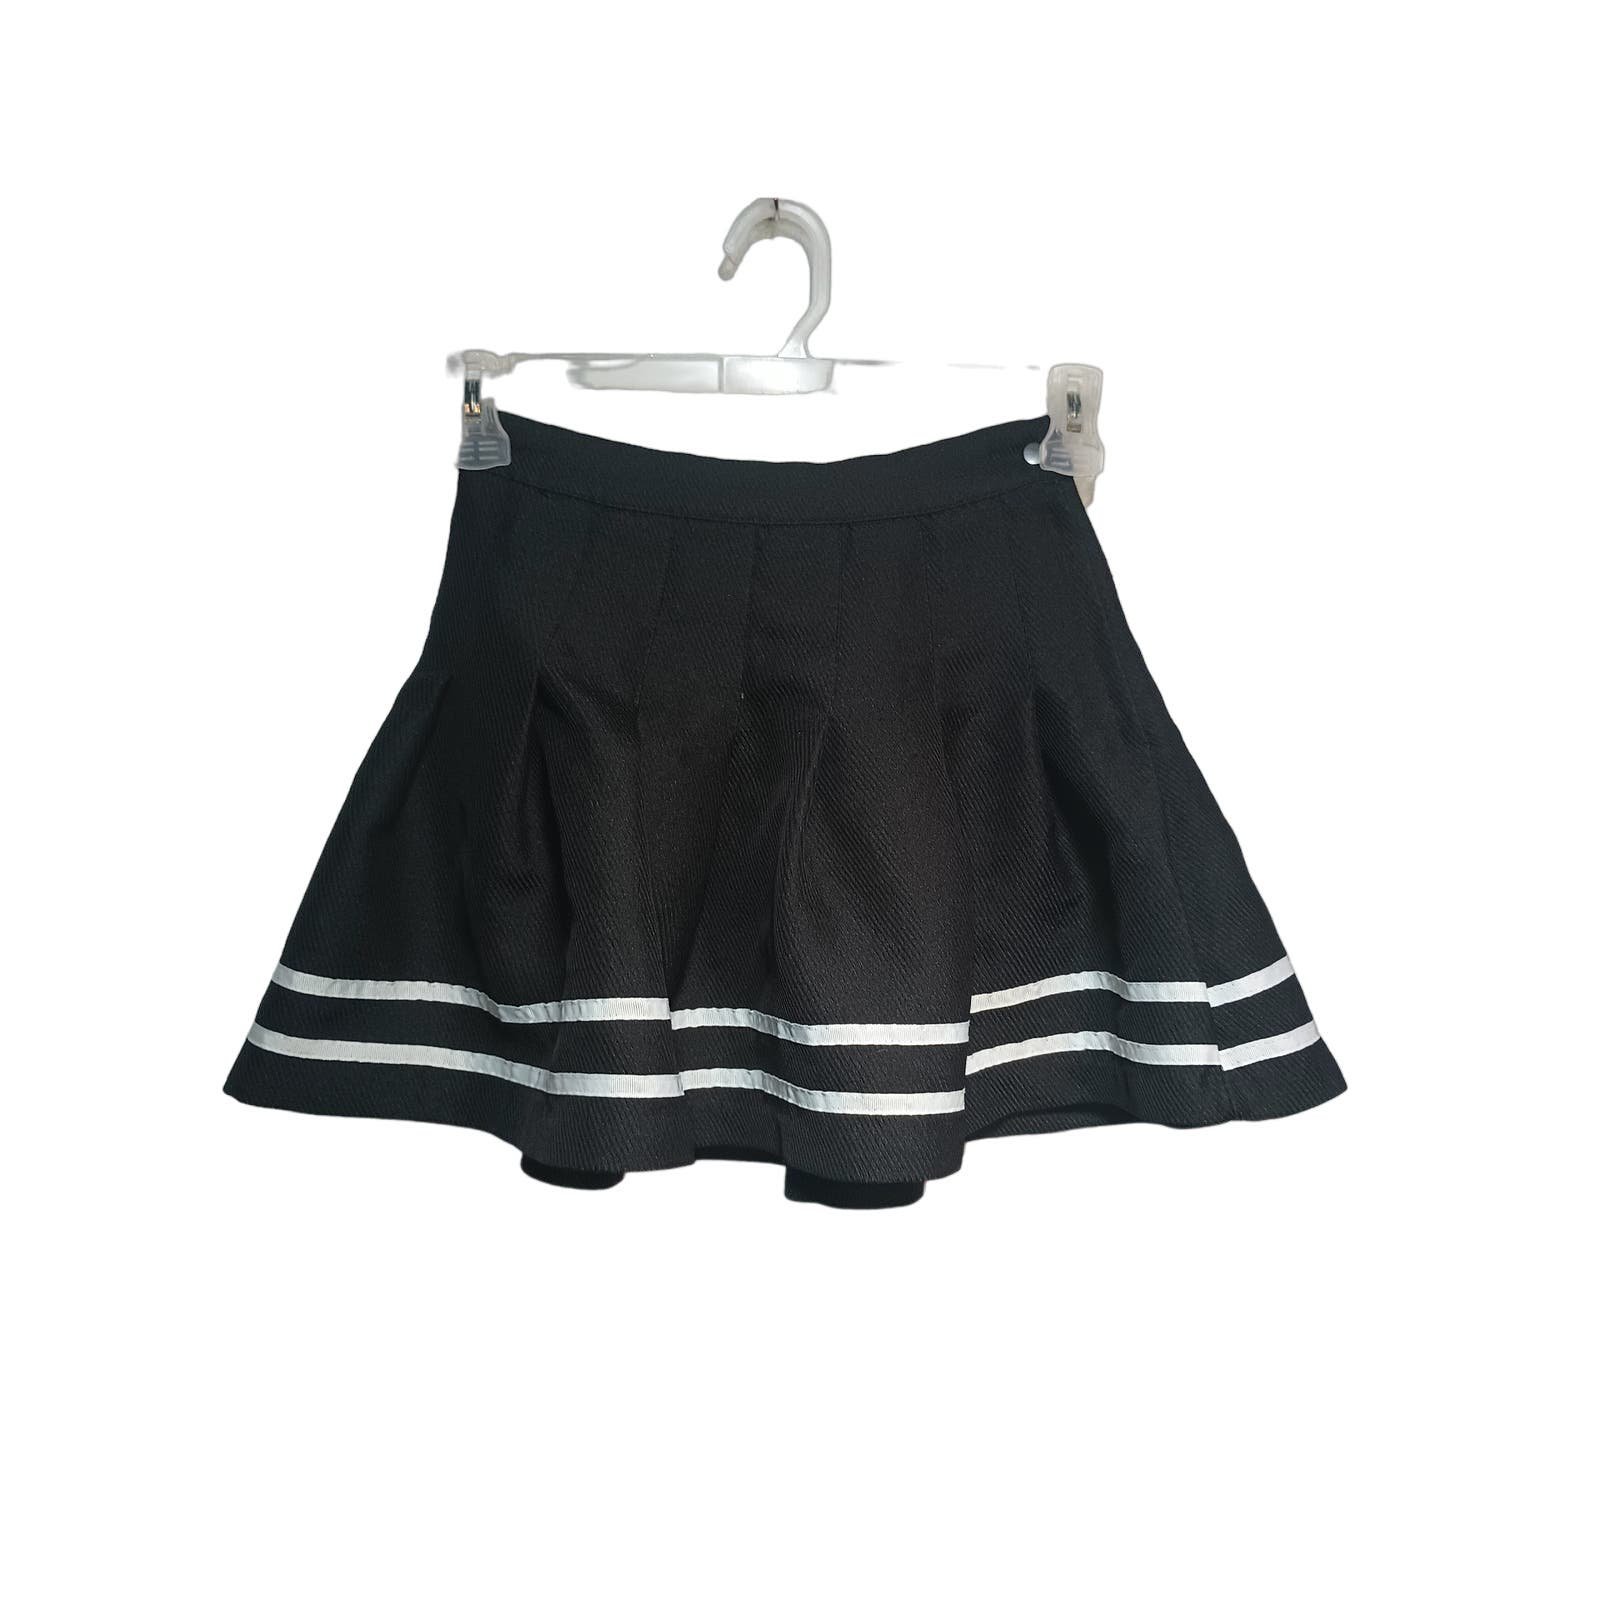 Cheap Divided Women´s Skirt Size 2 iV6WbLH0K Cool